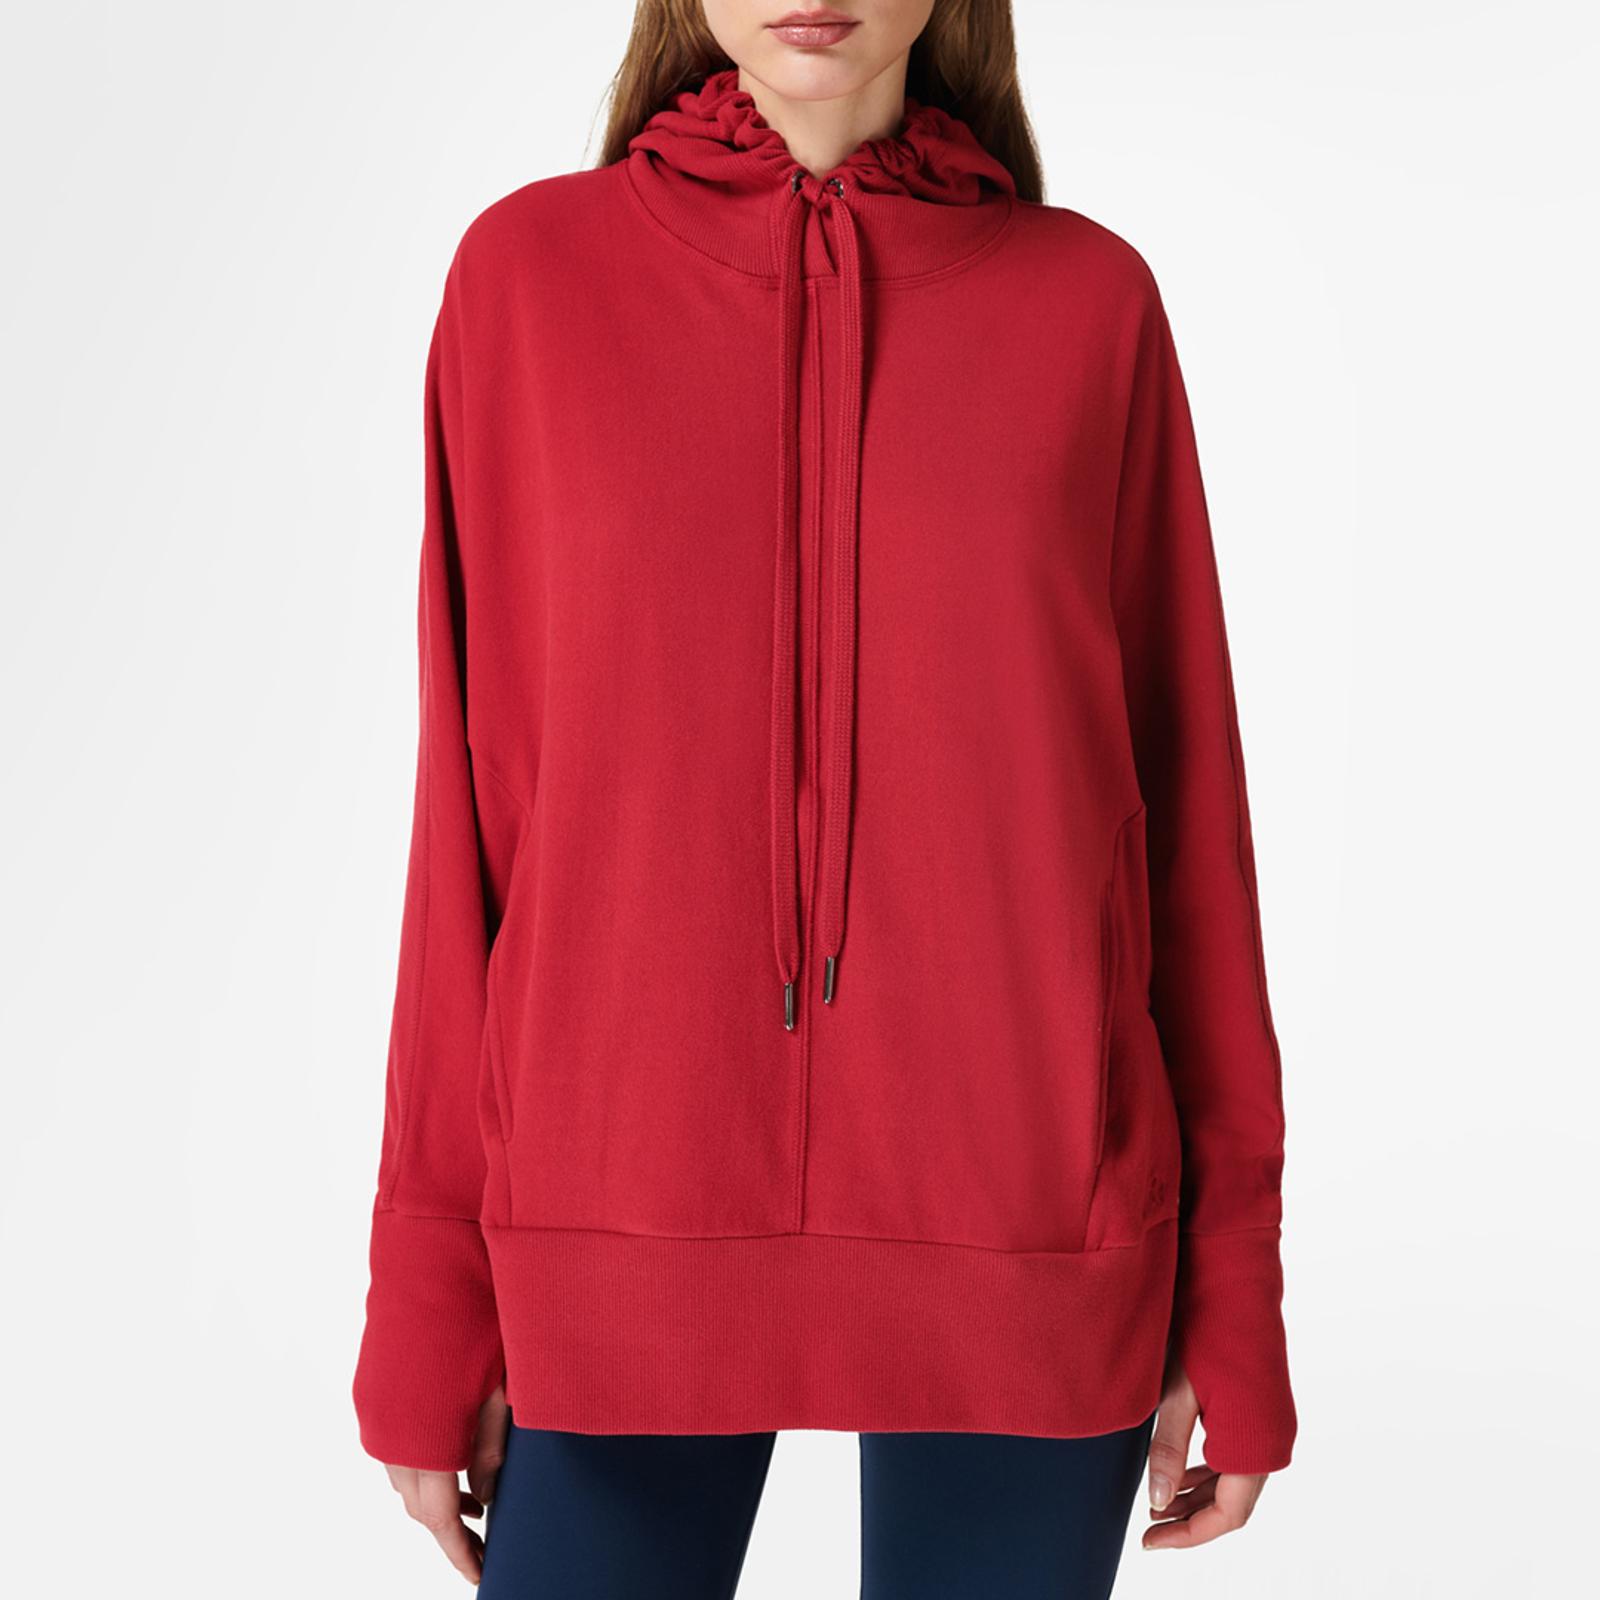 Liberate Luxe Fleece Hoody - Vine Red - Clothing - Women - BrandAlley